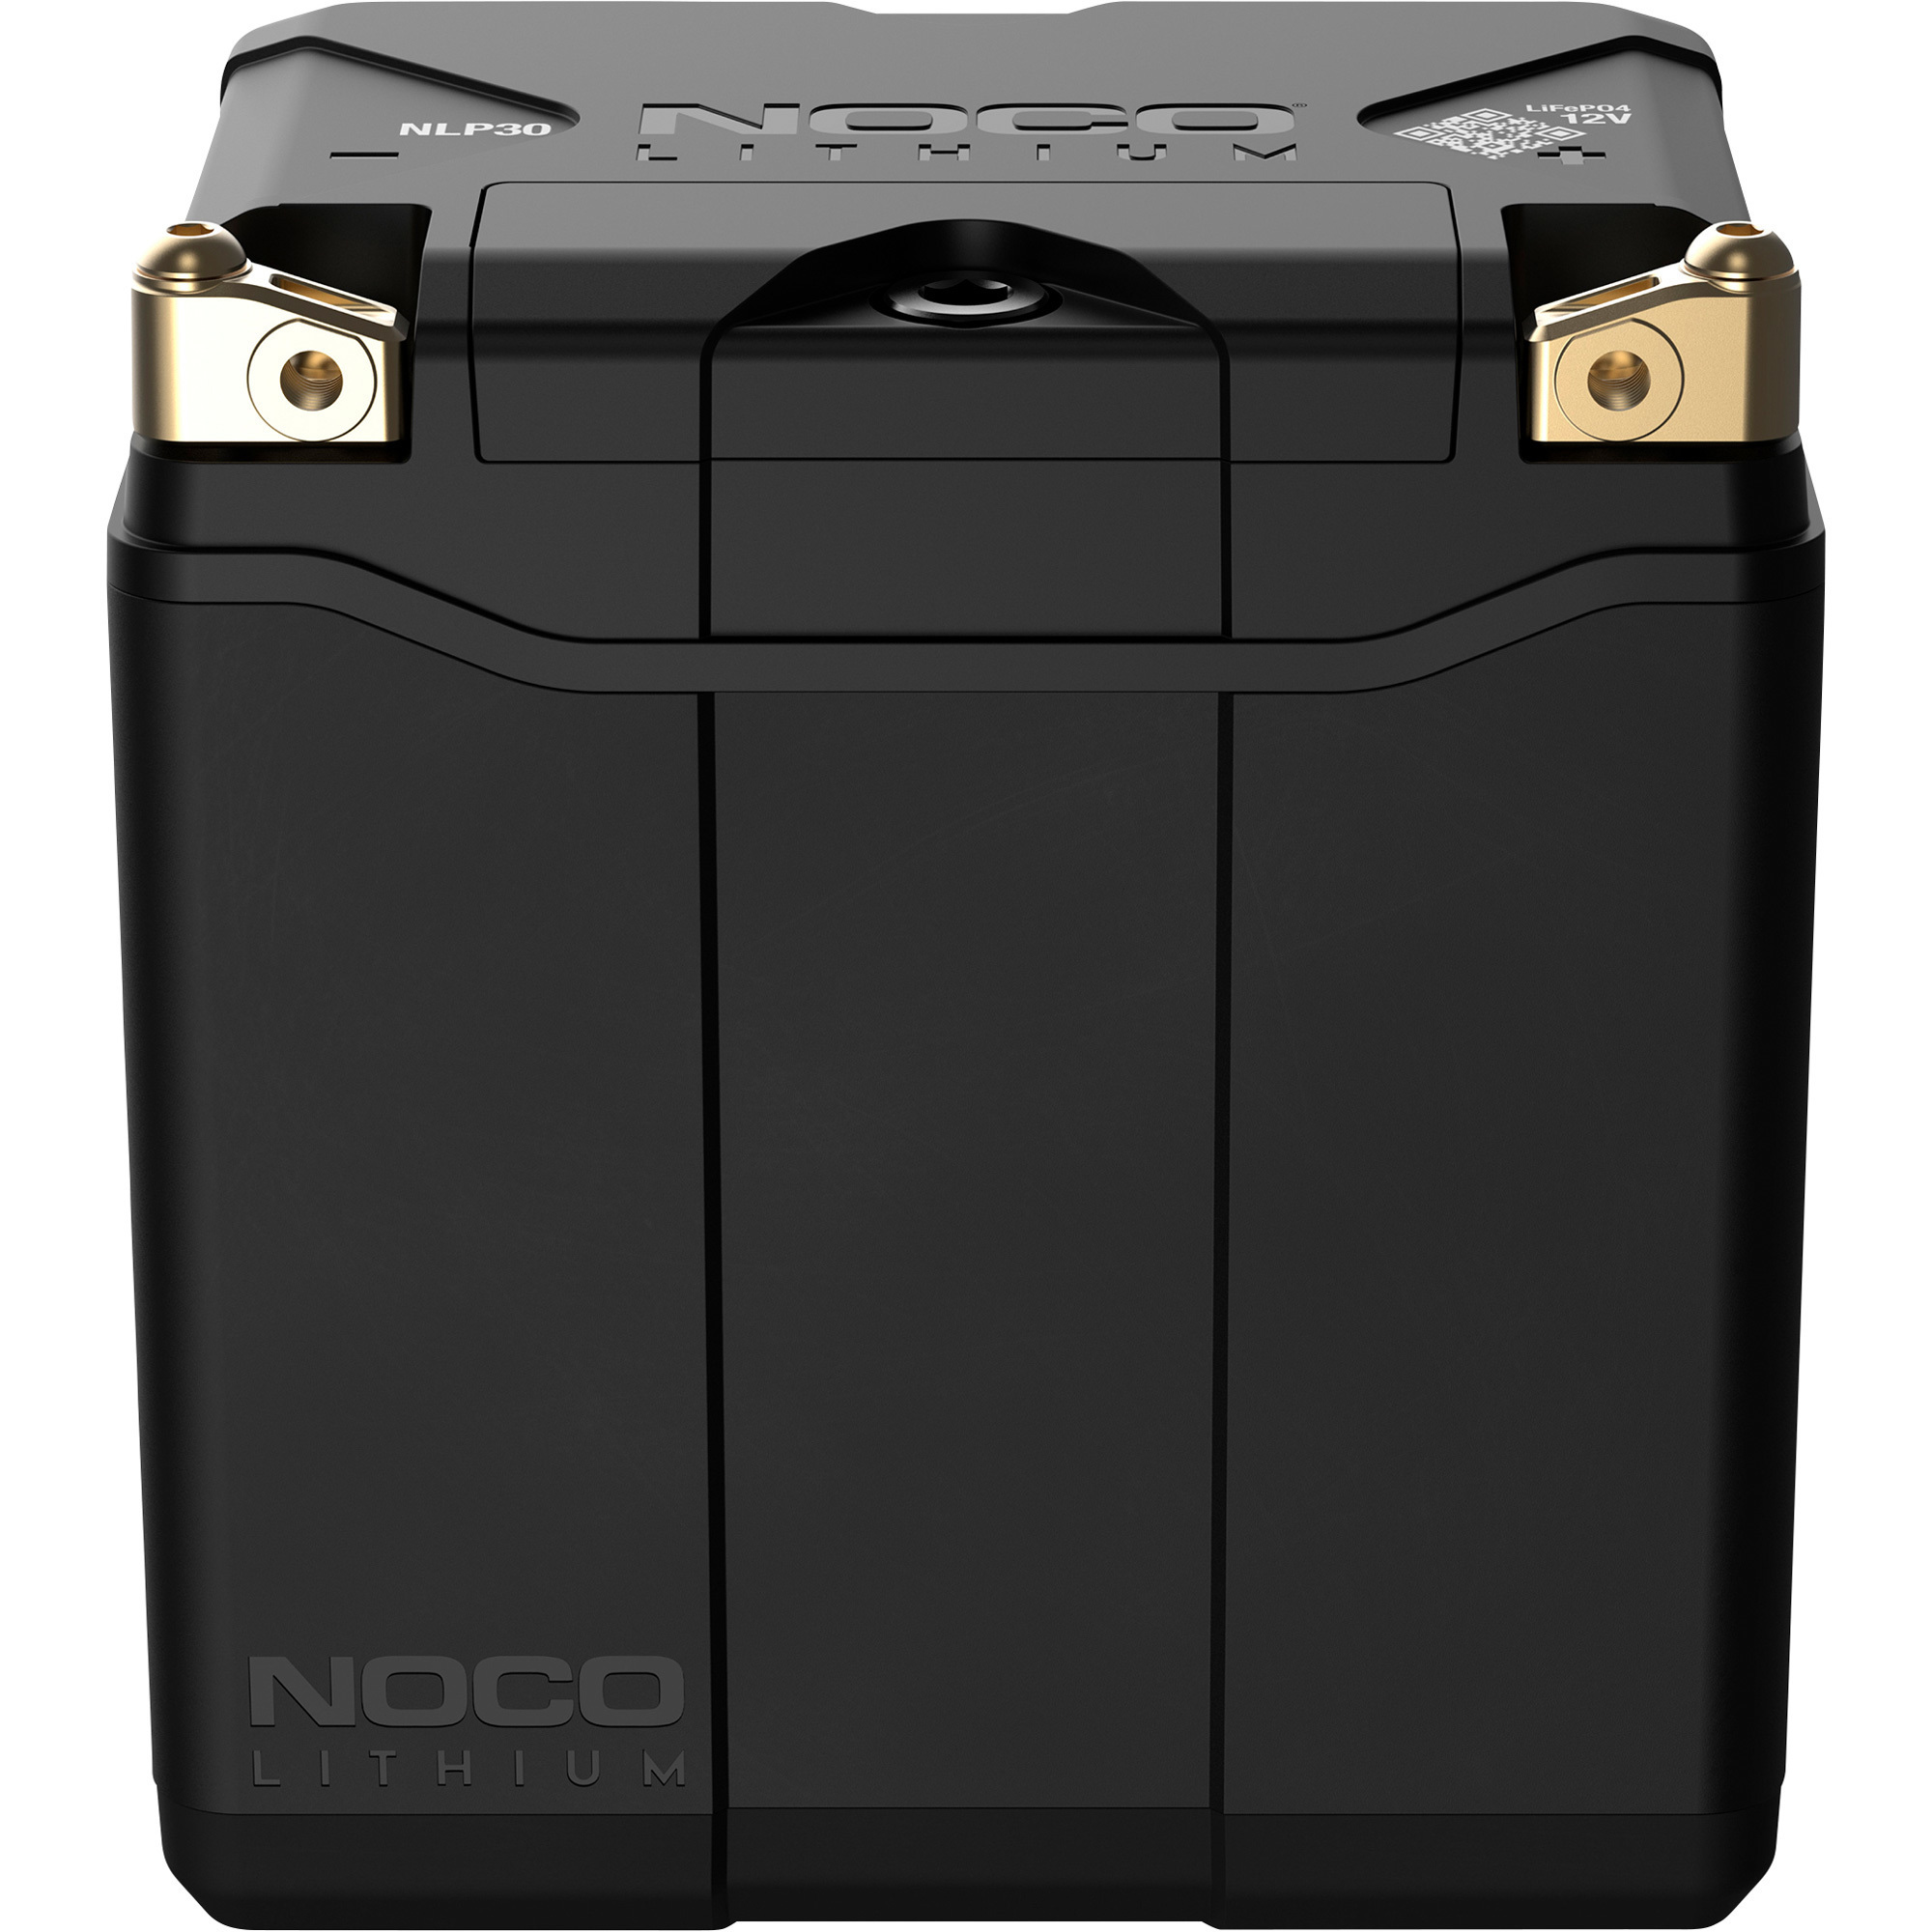 Noco Lithium Powersport Battery â 12 Volts, 700 Amps, Model NLP30